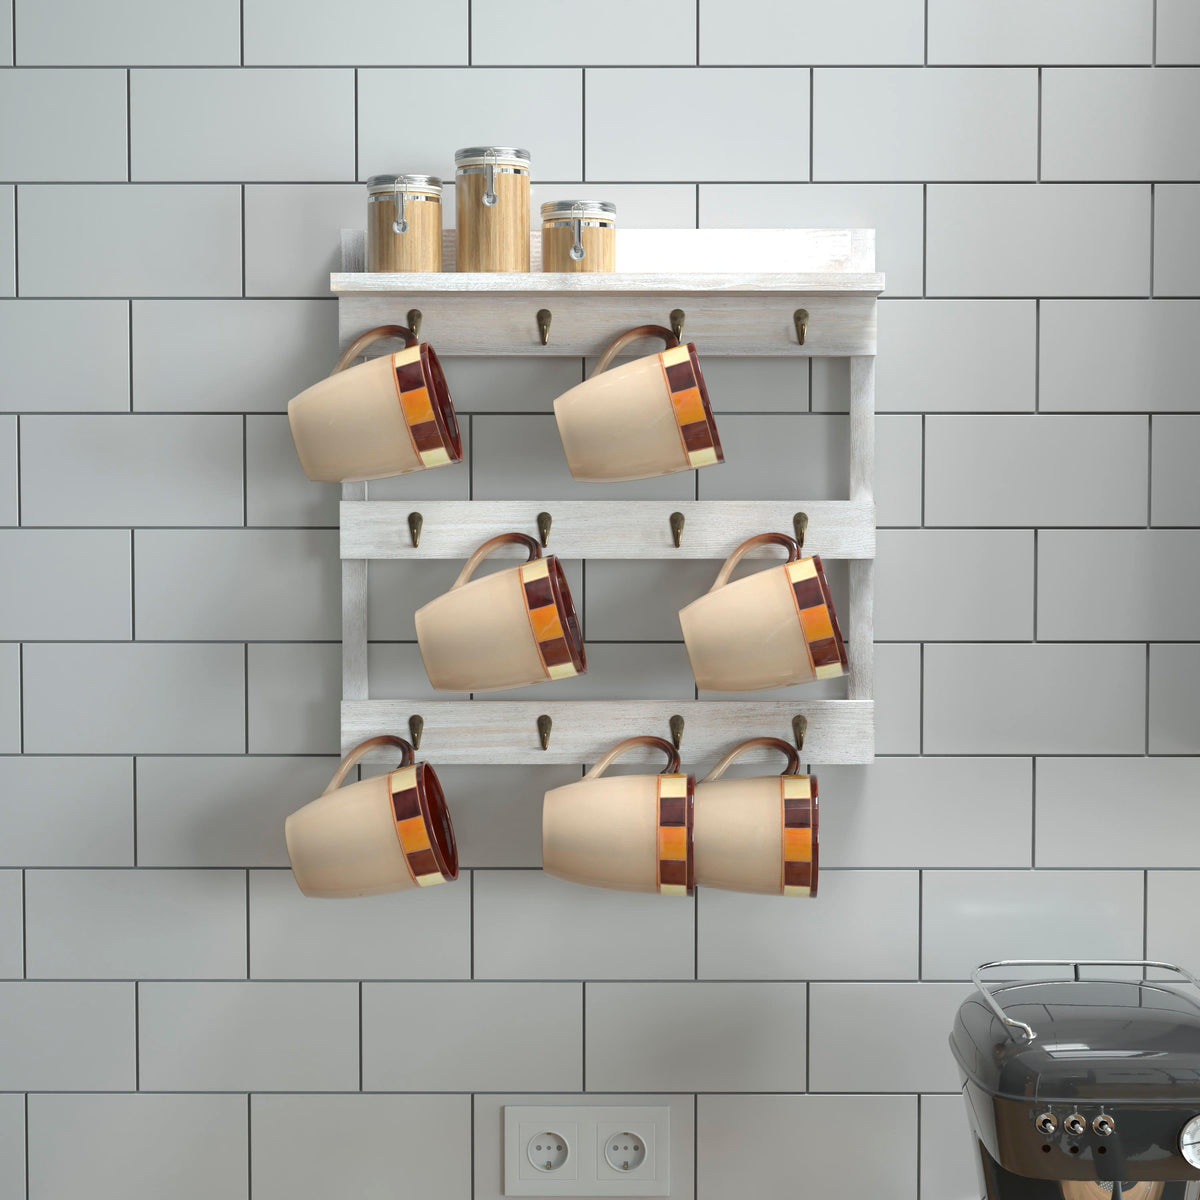 White Wash |#| 12 Cup Wall Mount Coffee Mug Rack with Upper Storage Shelf - Whitewashed